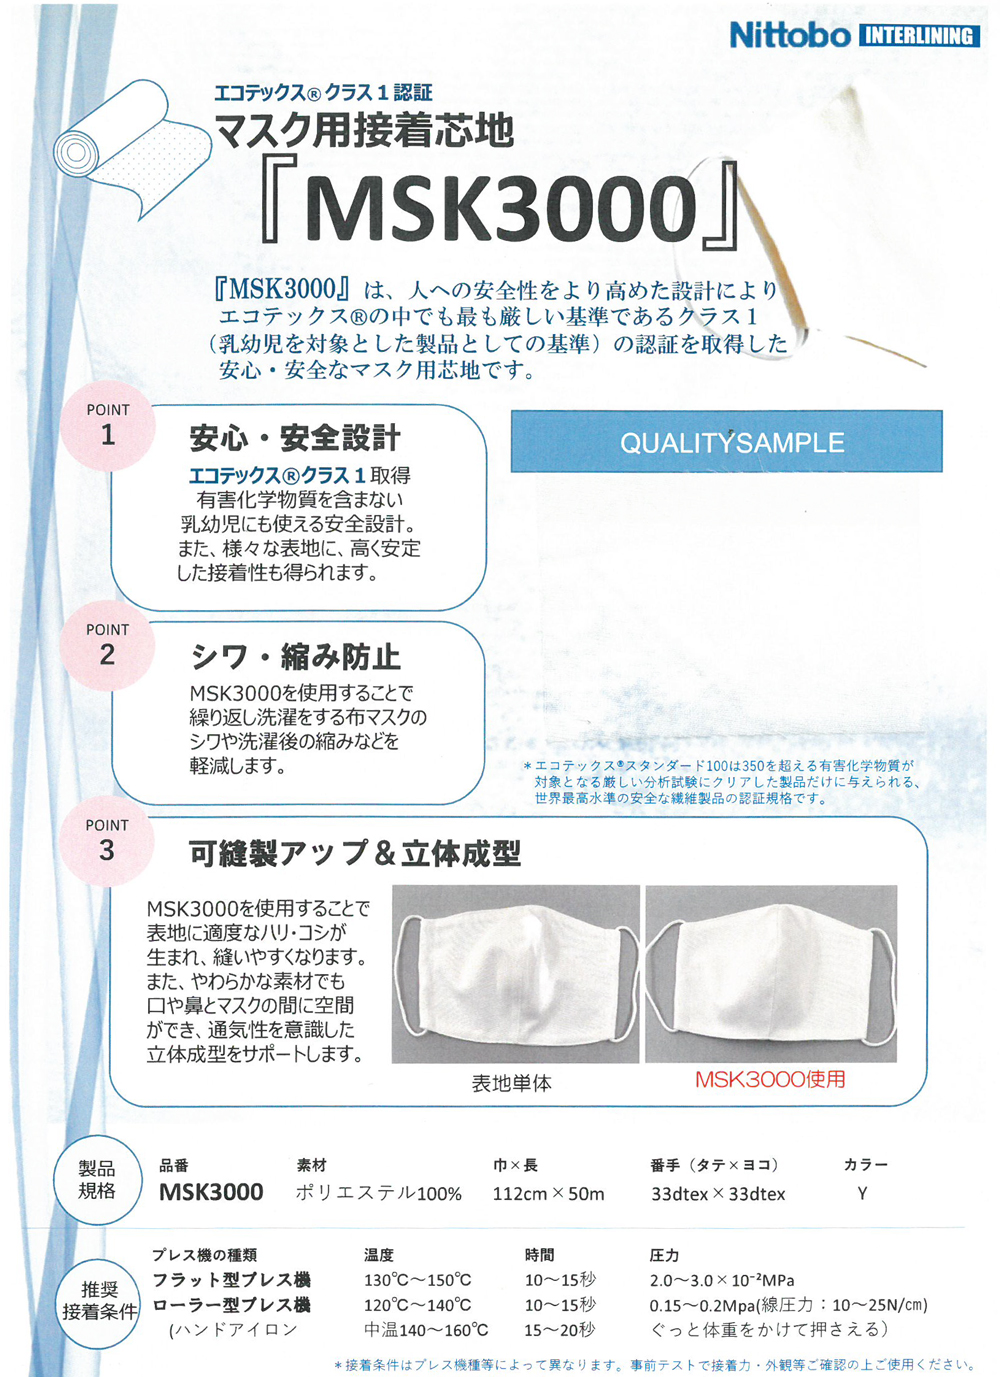 MSK3000 Ecotex® Standard 100 Certified Fusible Interlining For Masks Nittobo